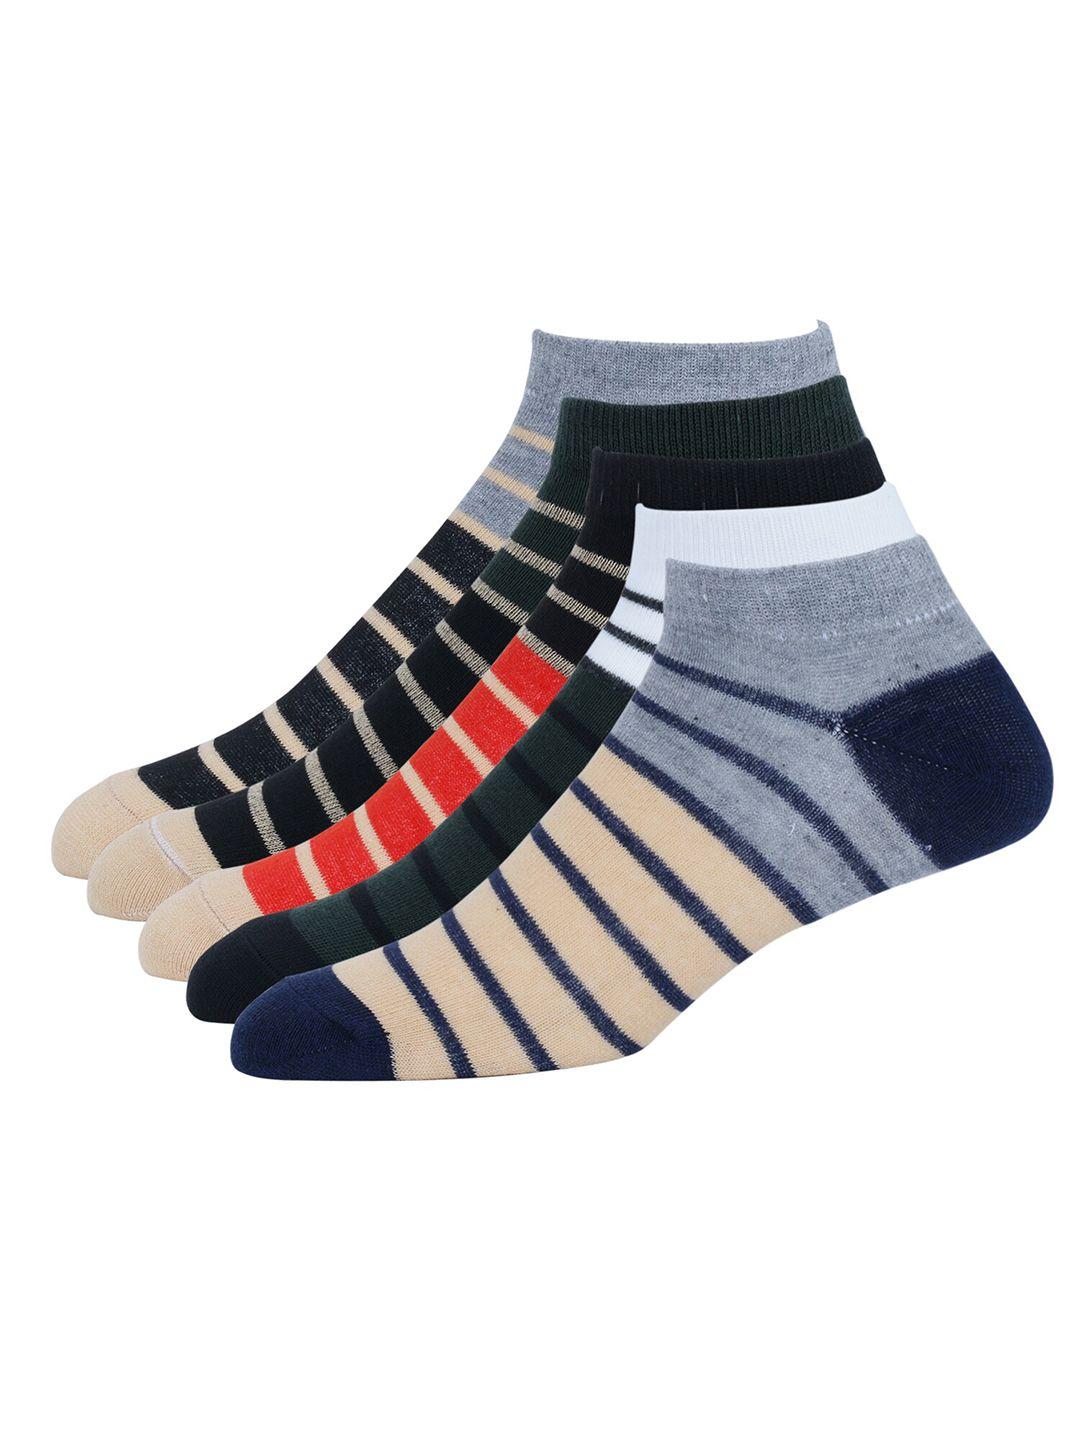 rodzen men pack of 5 striped above ankle-length cotton socks